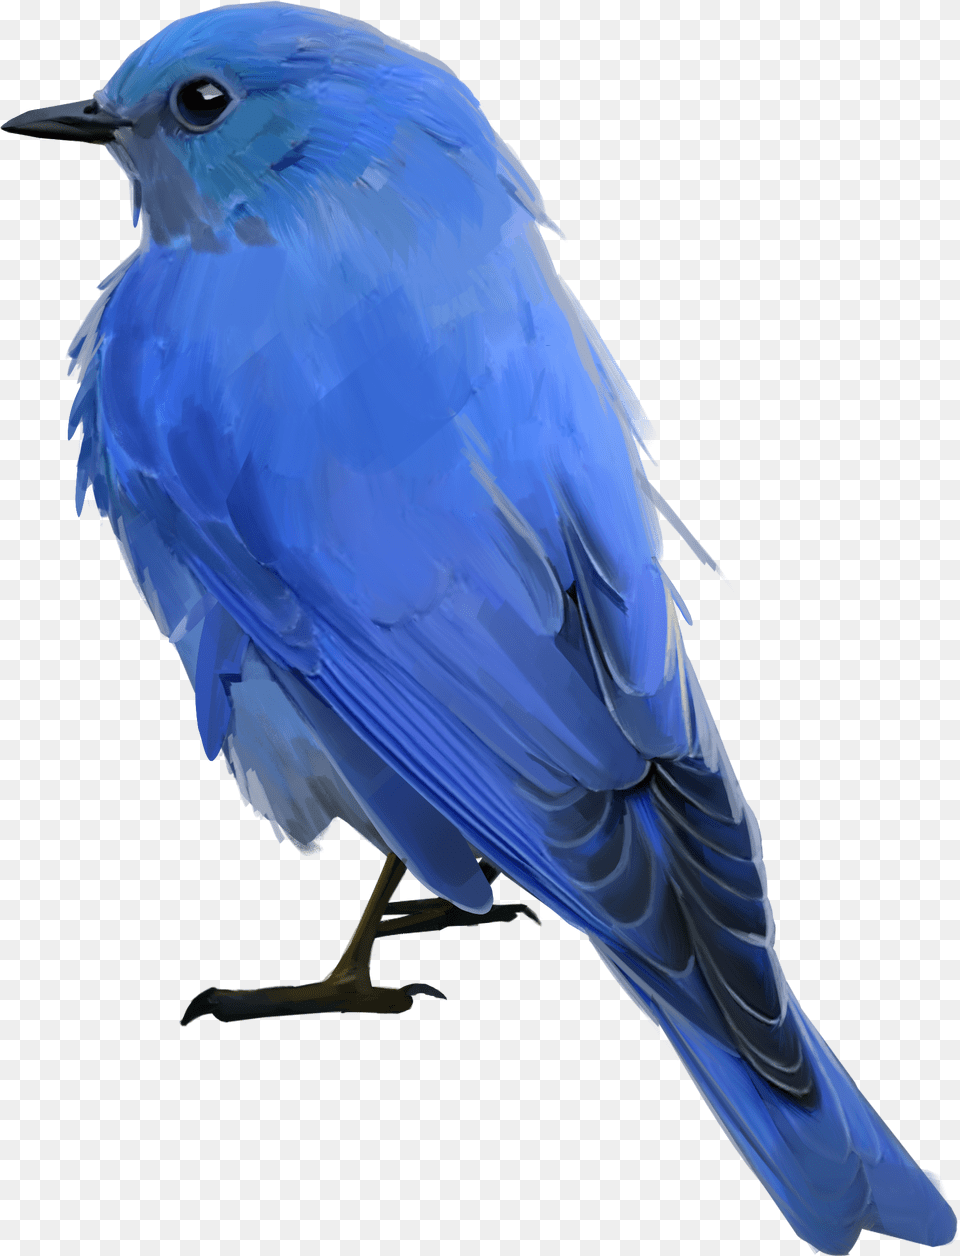 Mountain Bluebird Download Mountain Bluebird Transparent Background, Animal, Bird, Blue Jay, Jay Png